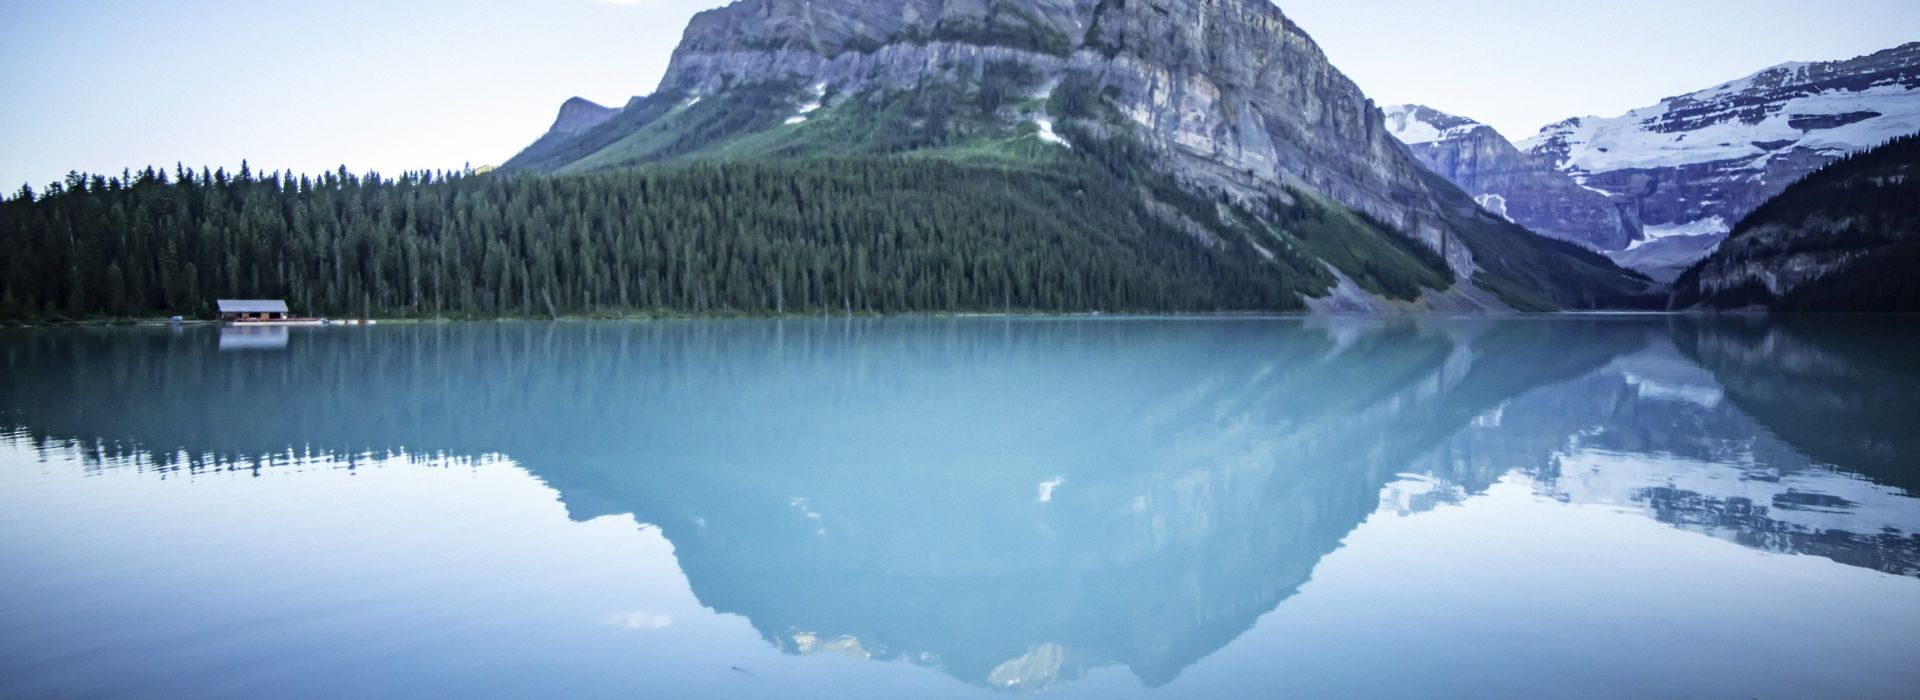 Intrepid-Travel-Canada-Banff-Lake-Louise-hut-reflection.jpg